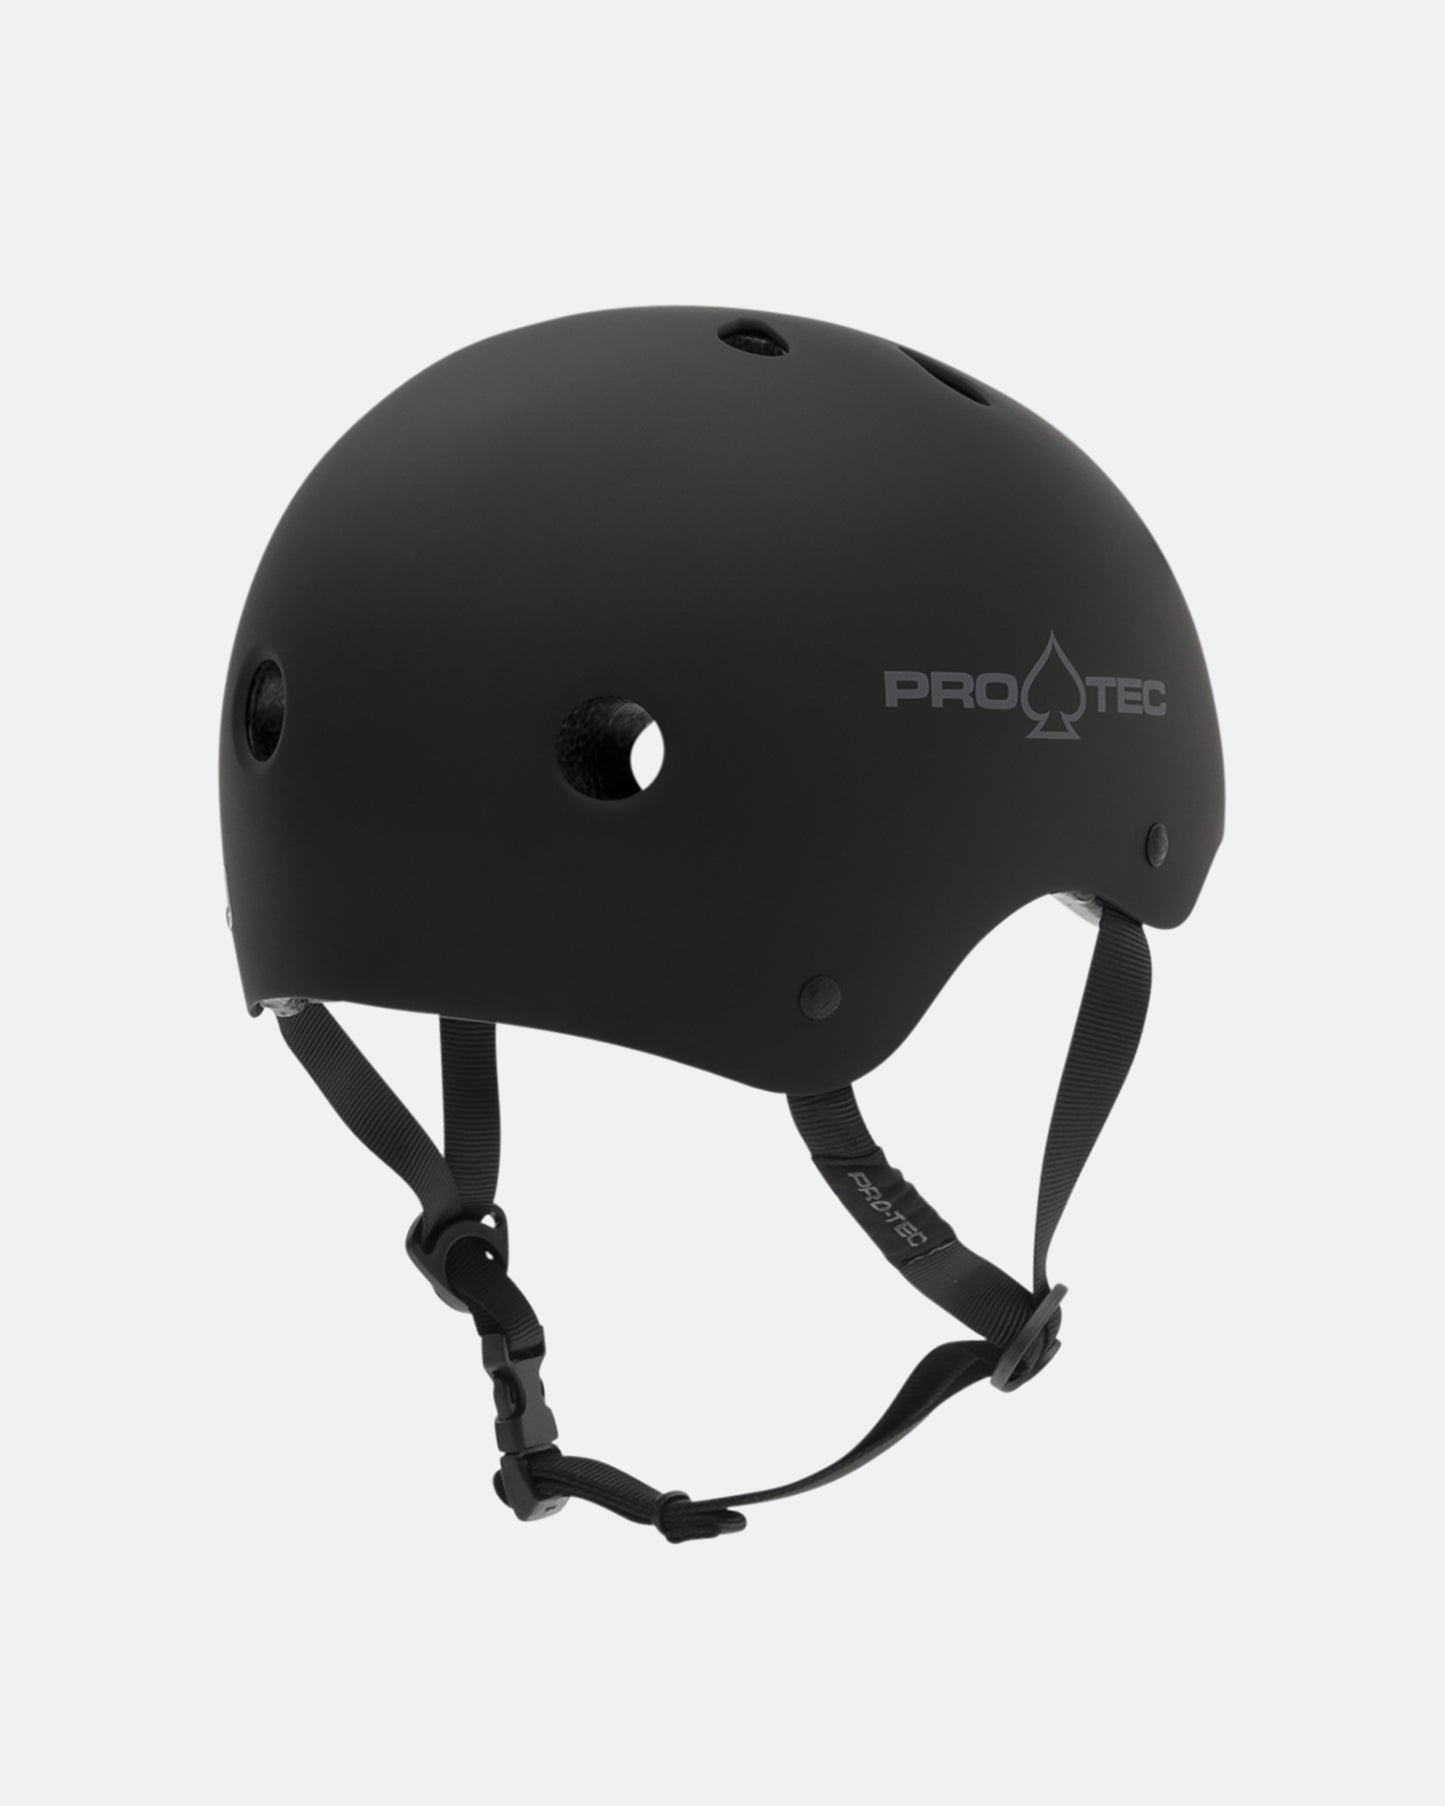 Protec Classic Helmet (Certified) - Matte Black - Impala Rollerskates